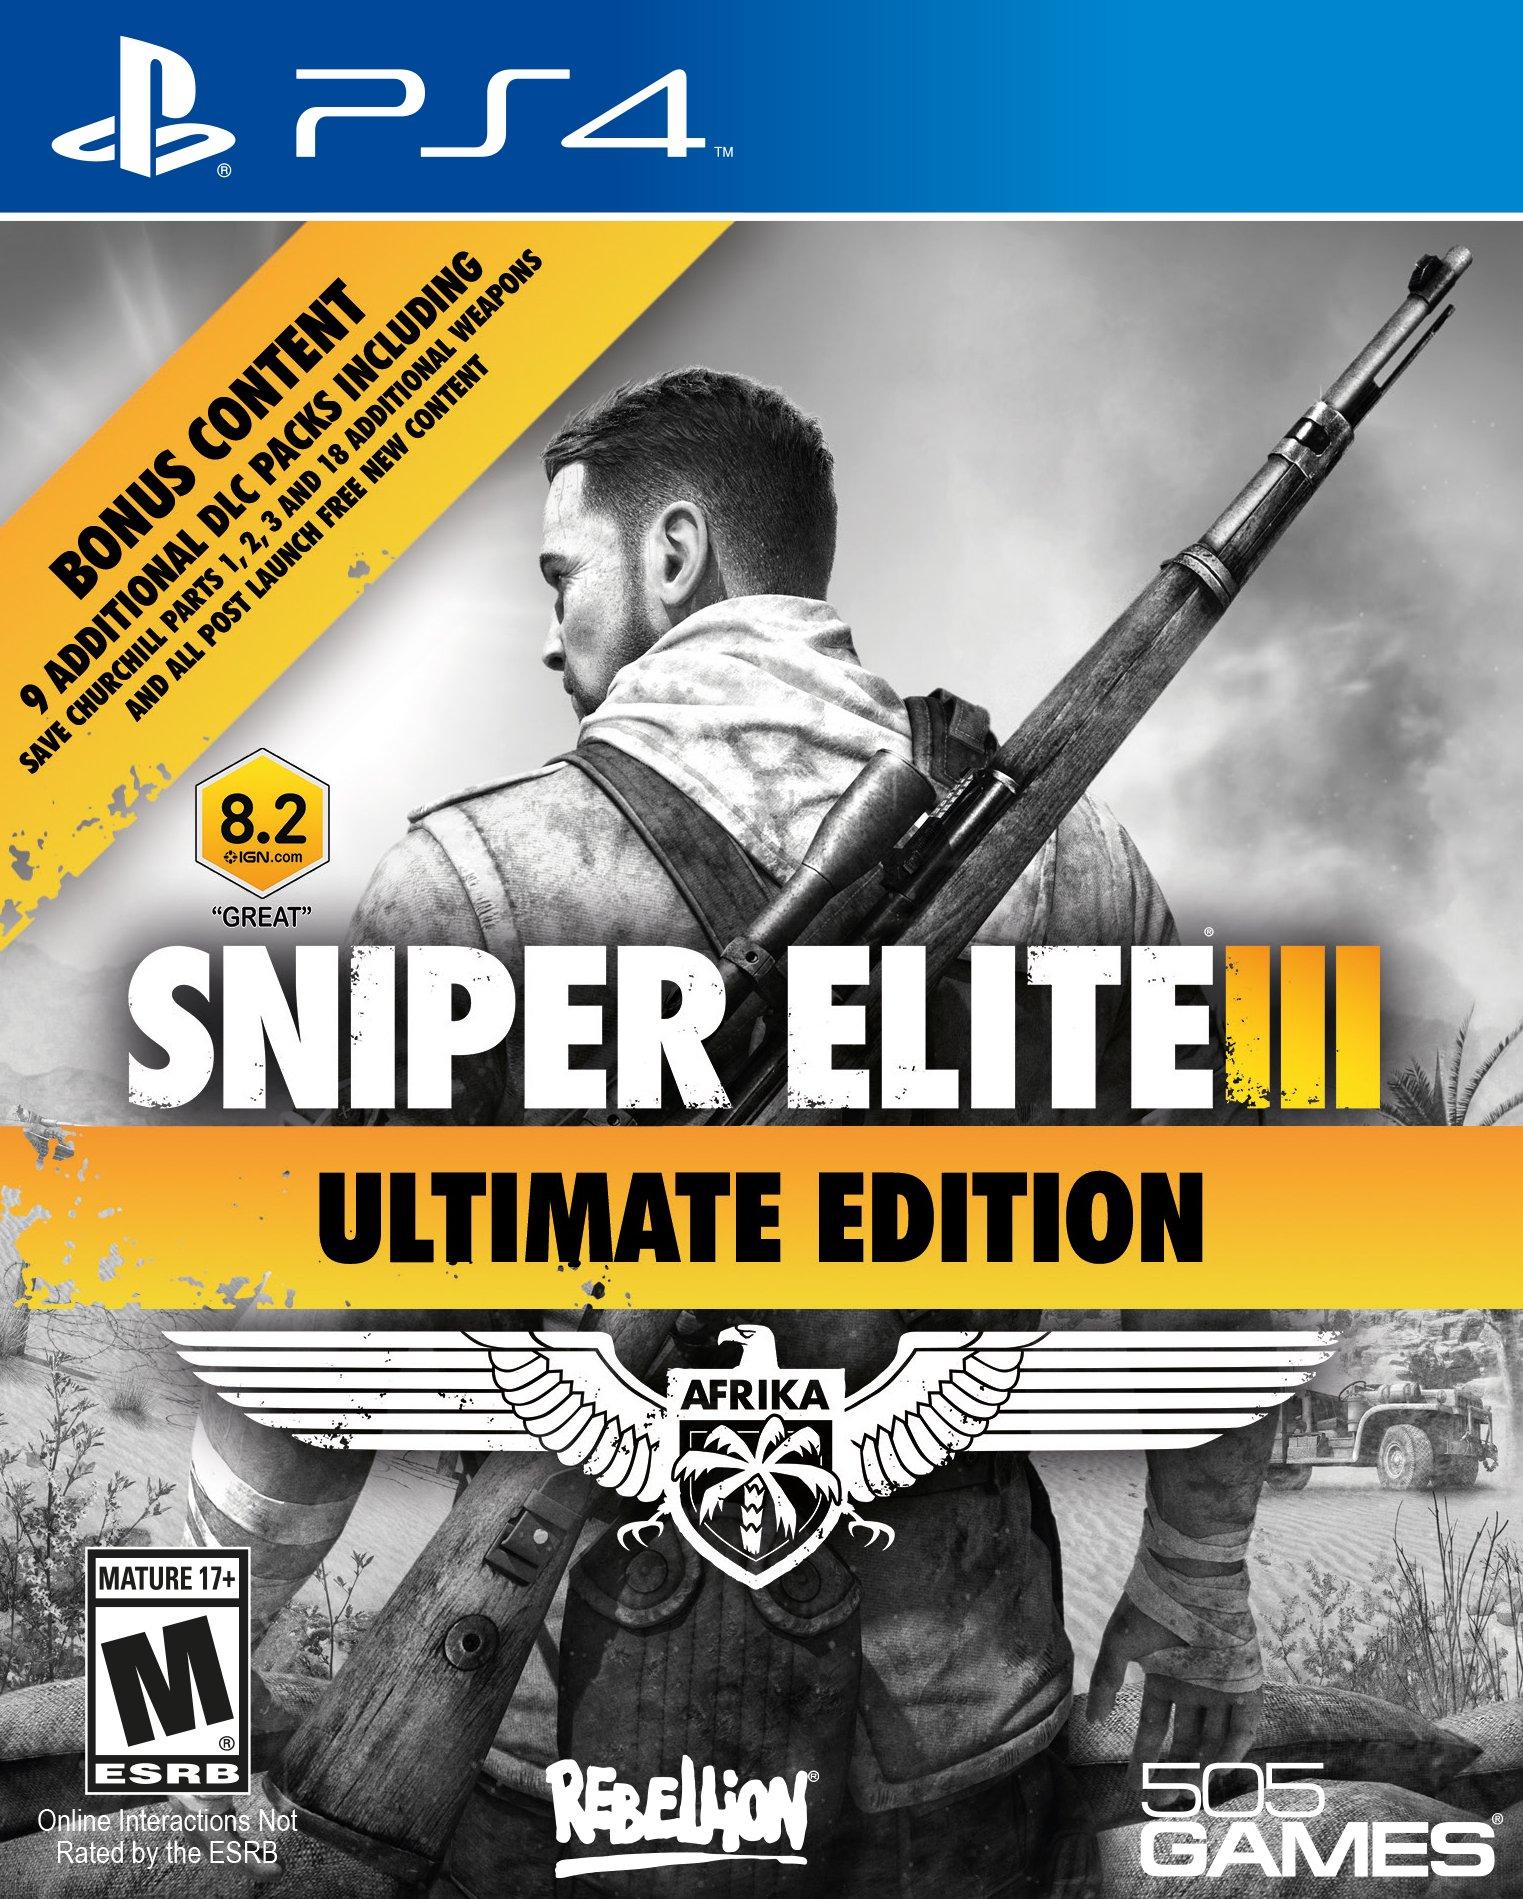 nintendo switch sniper elite 3 ultimate edition